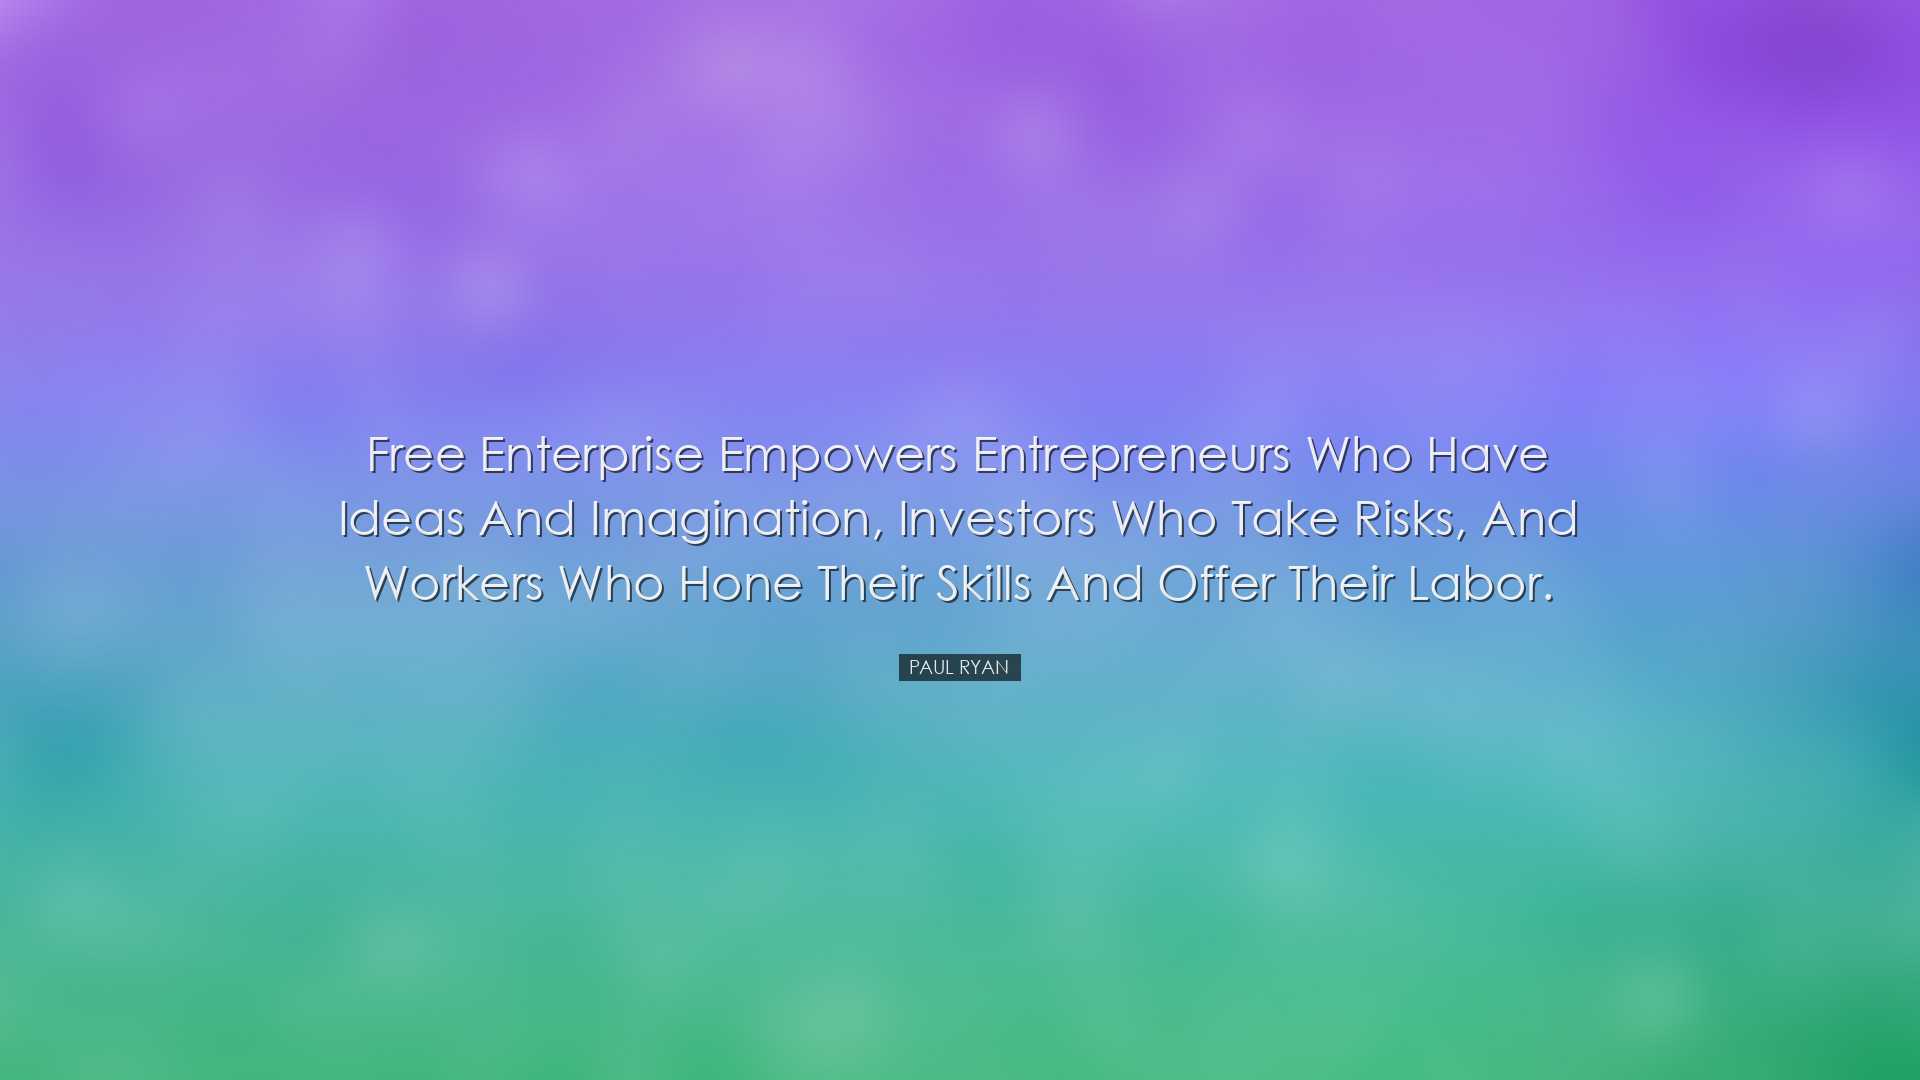 Free enterprise empowers entrepreneurs who have ideas and imaginat